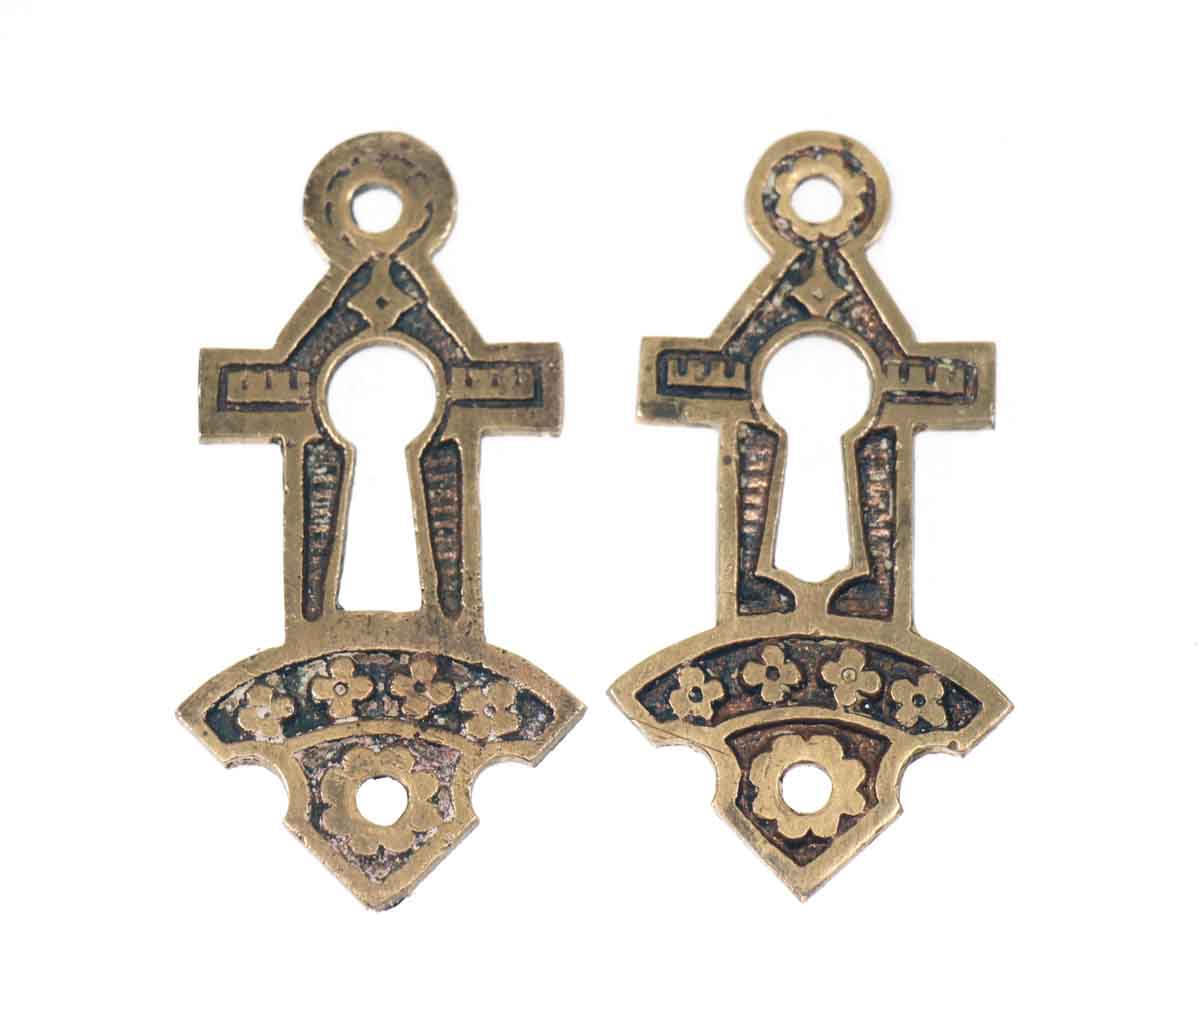 Set of Two Ornate Eastlake Style Keyhole Covers